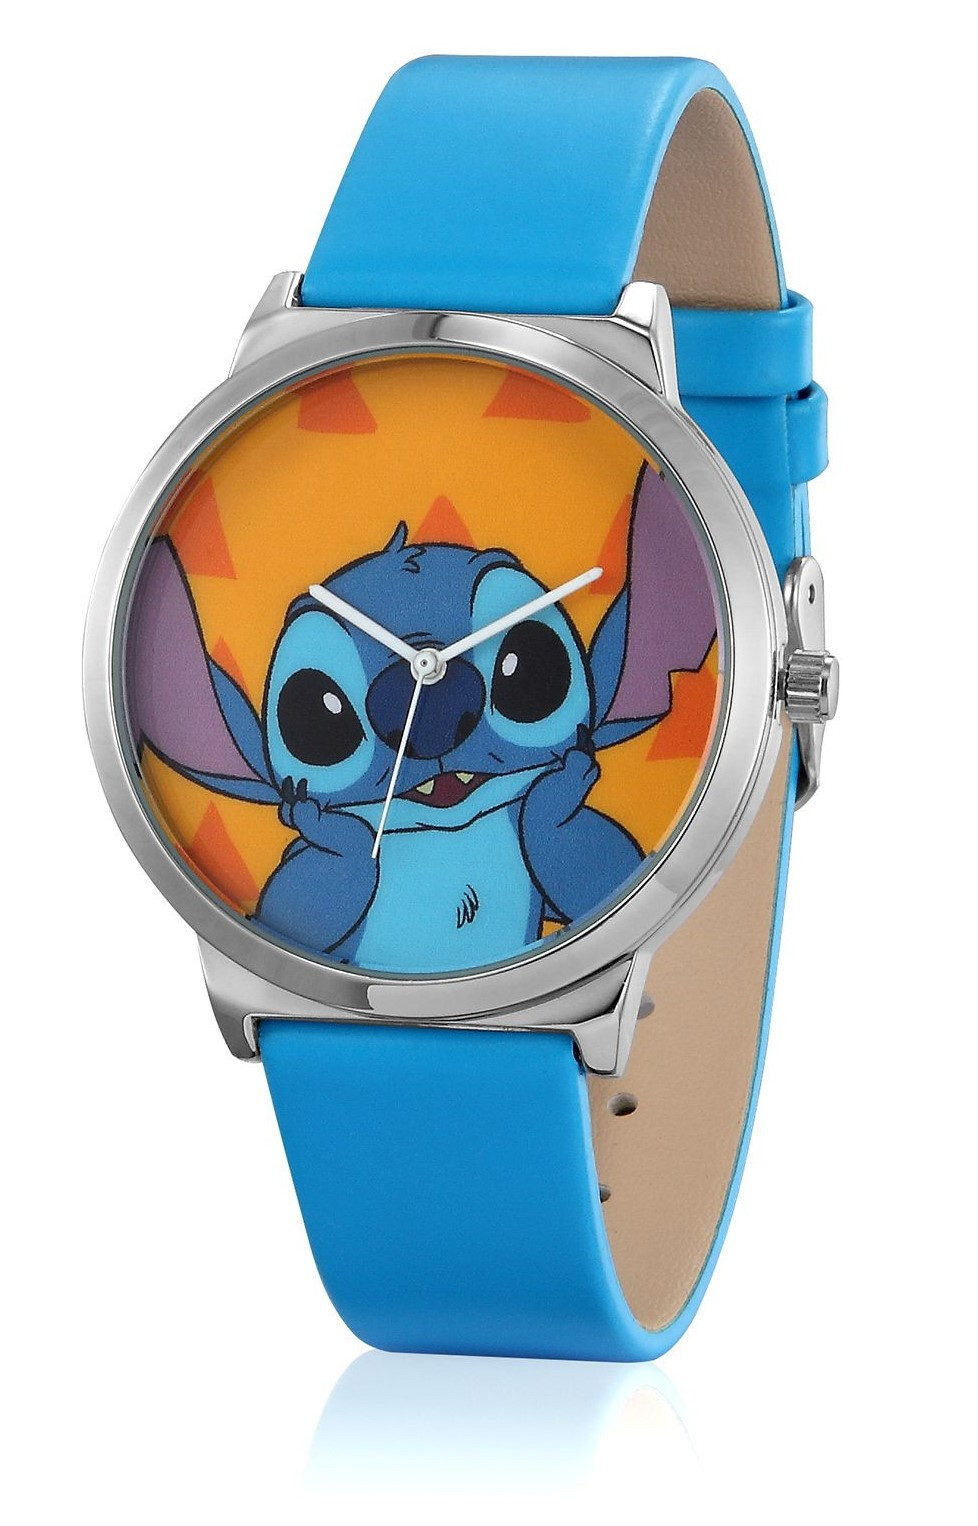 Reloj de pulsera Stitch Disney por 39,90€ –